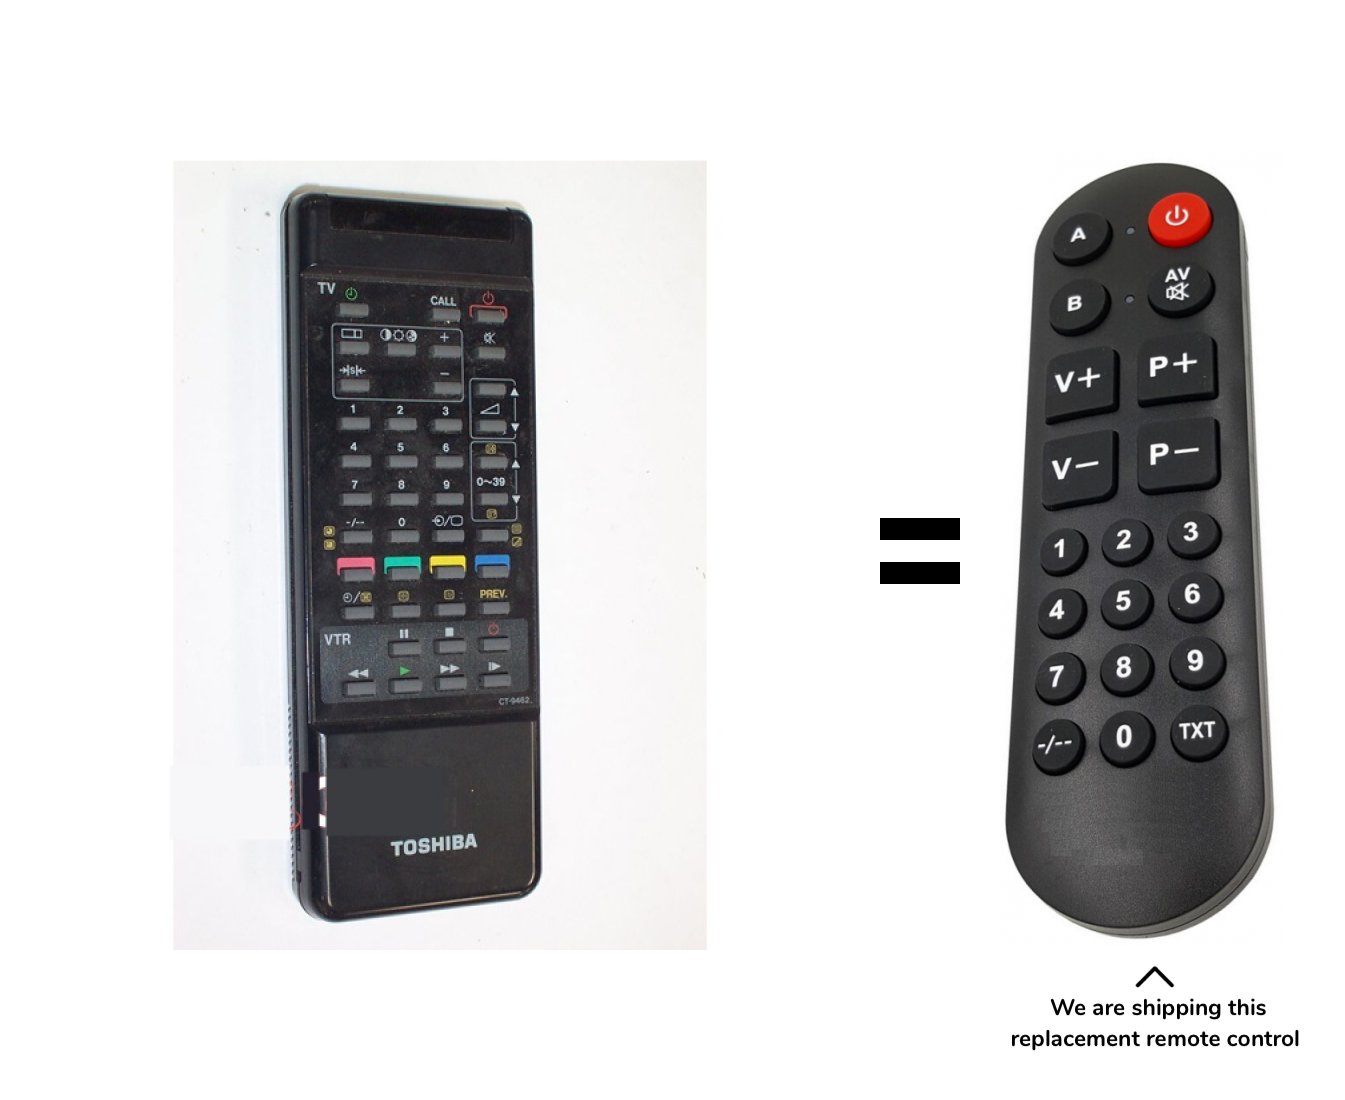 Toshiba CT-9385 remote control for seniors